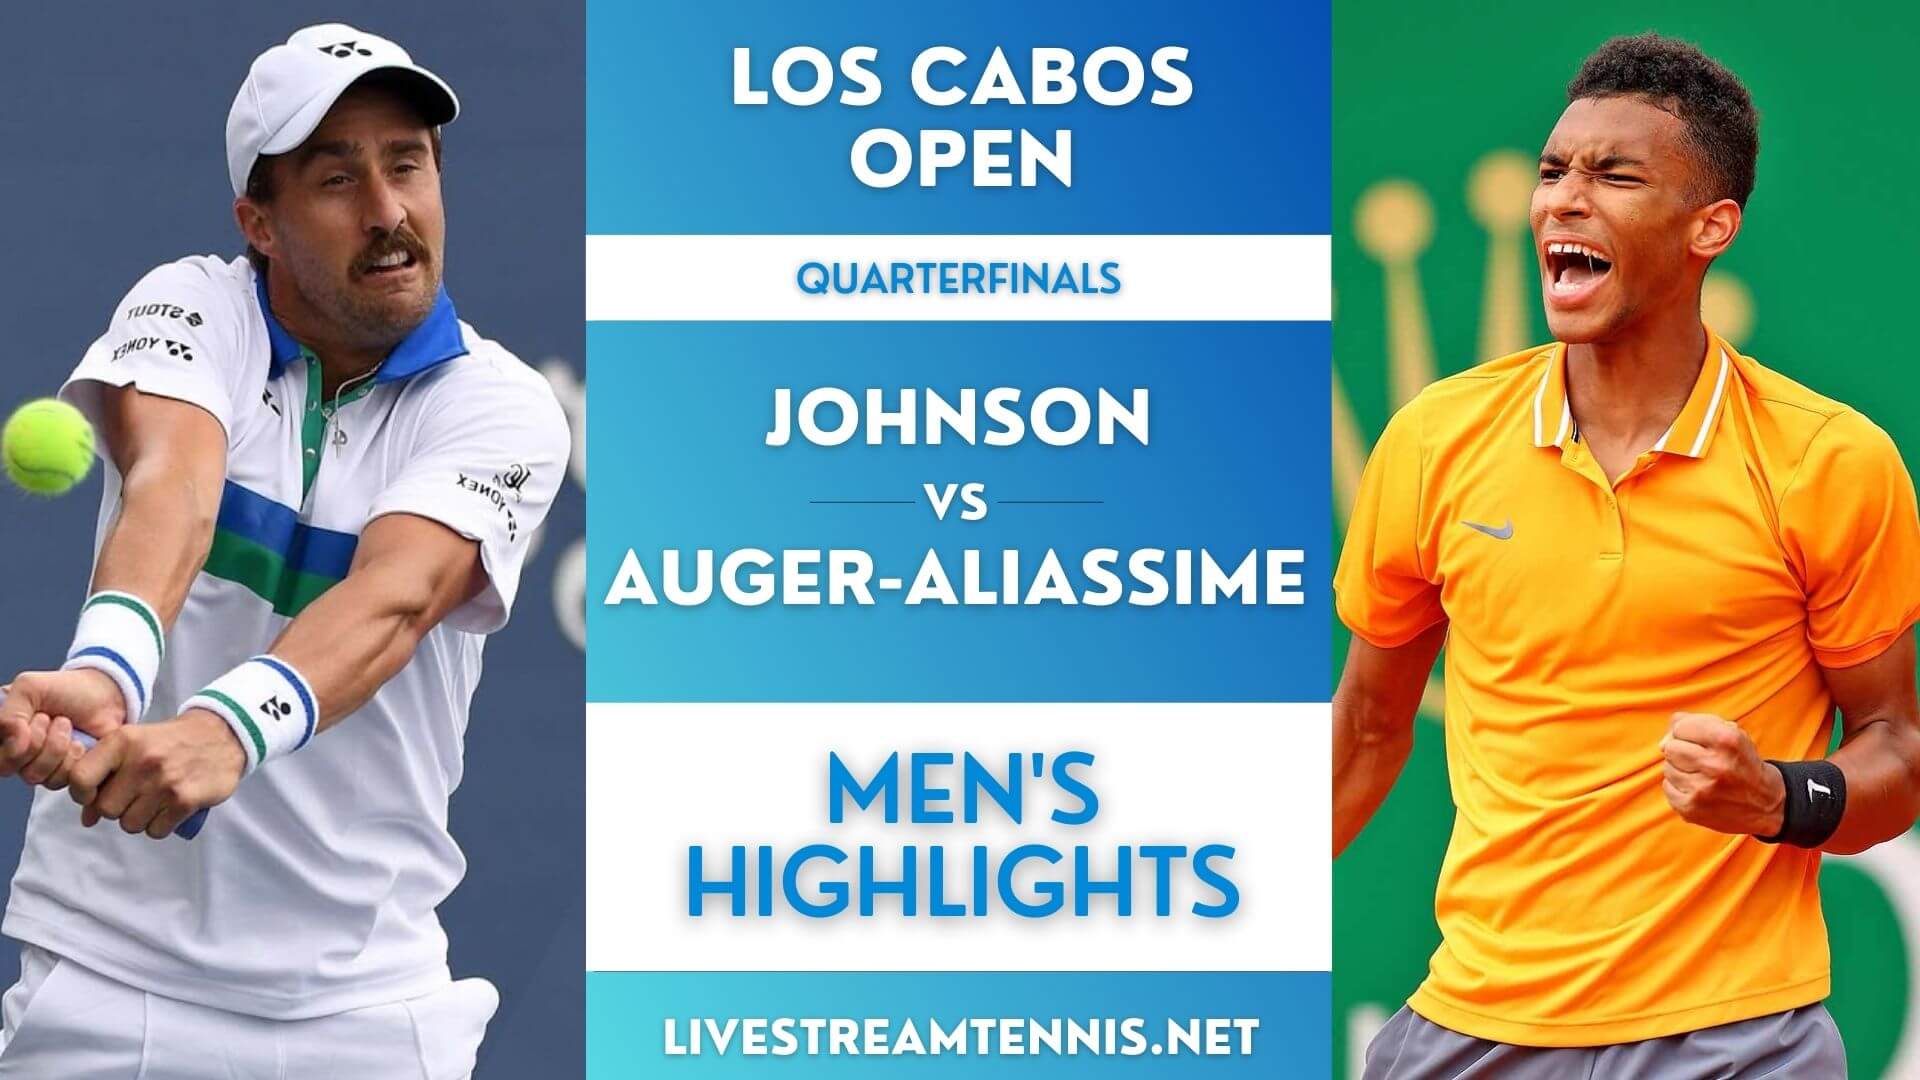 Los Cabos Open ATP Quarterfinal 2 Highlights 2022